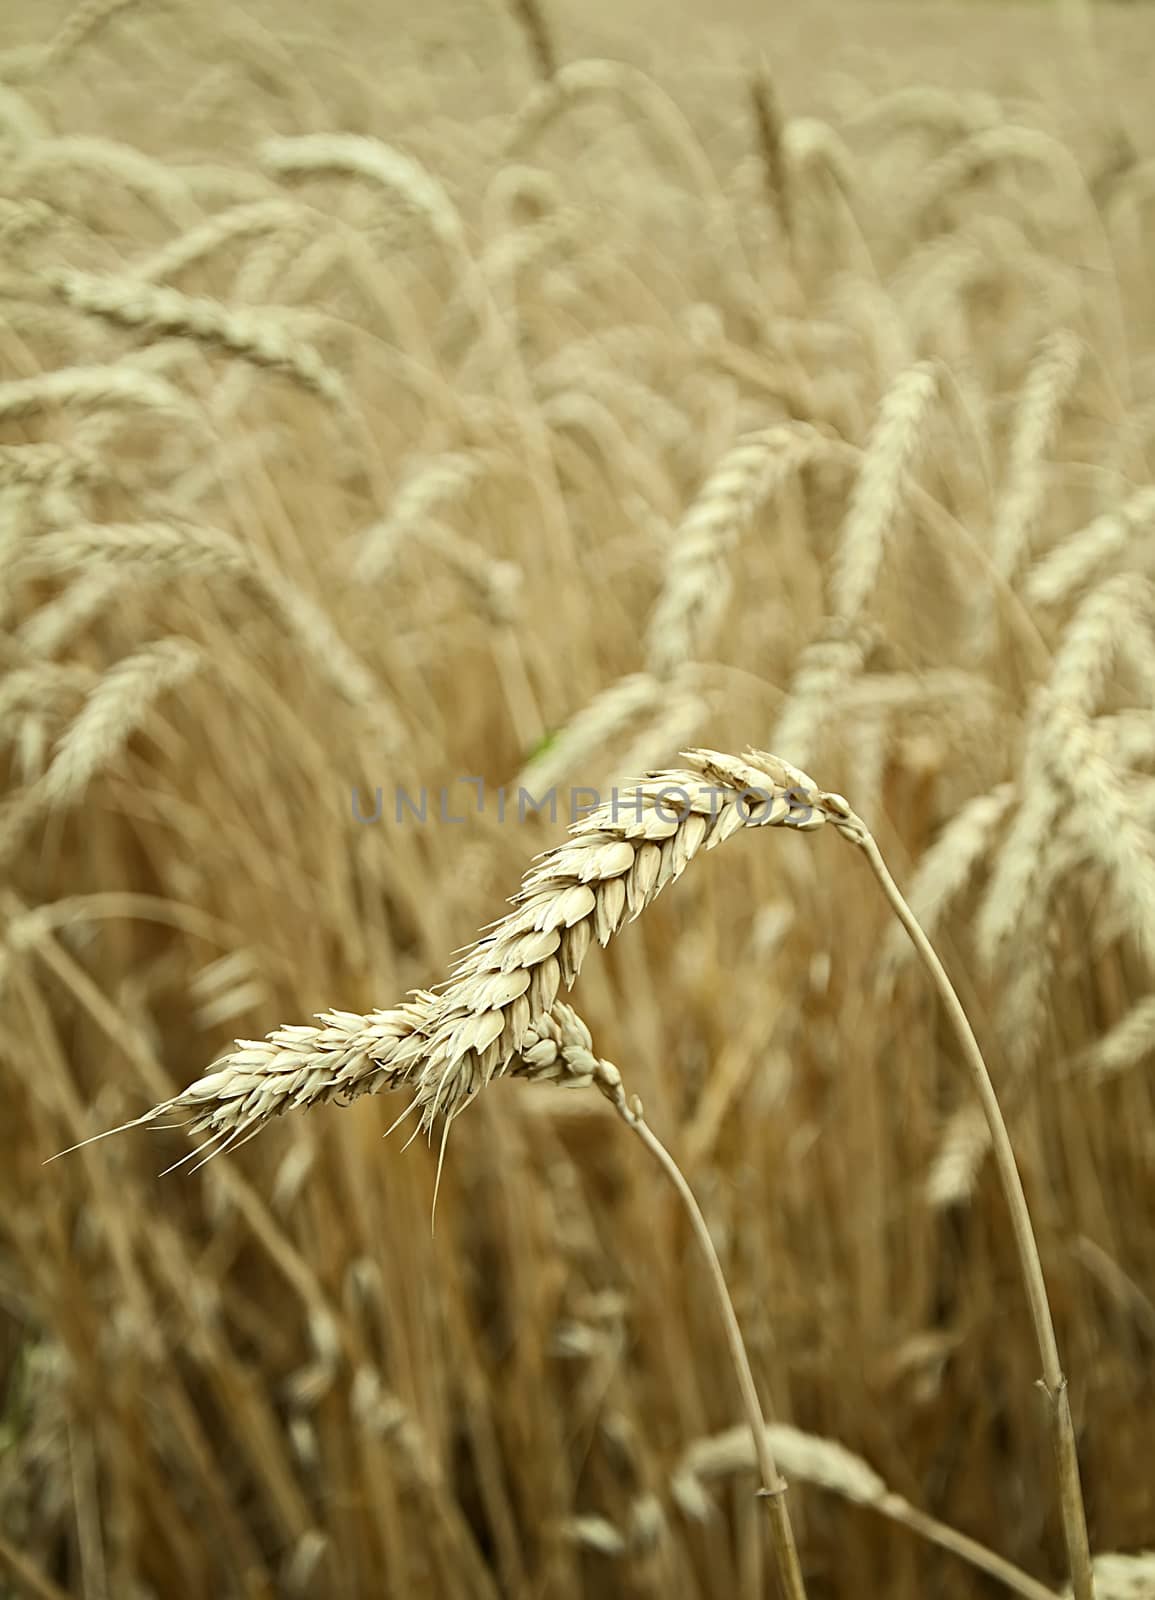 Classes of mature wheat grains 